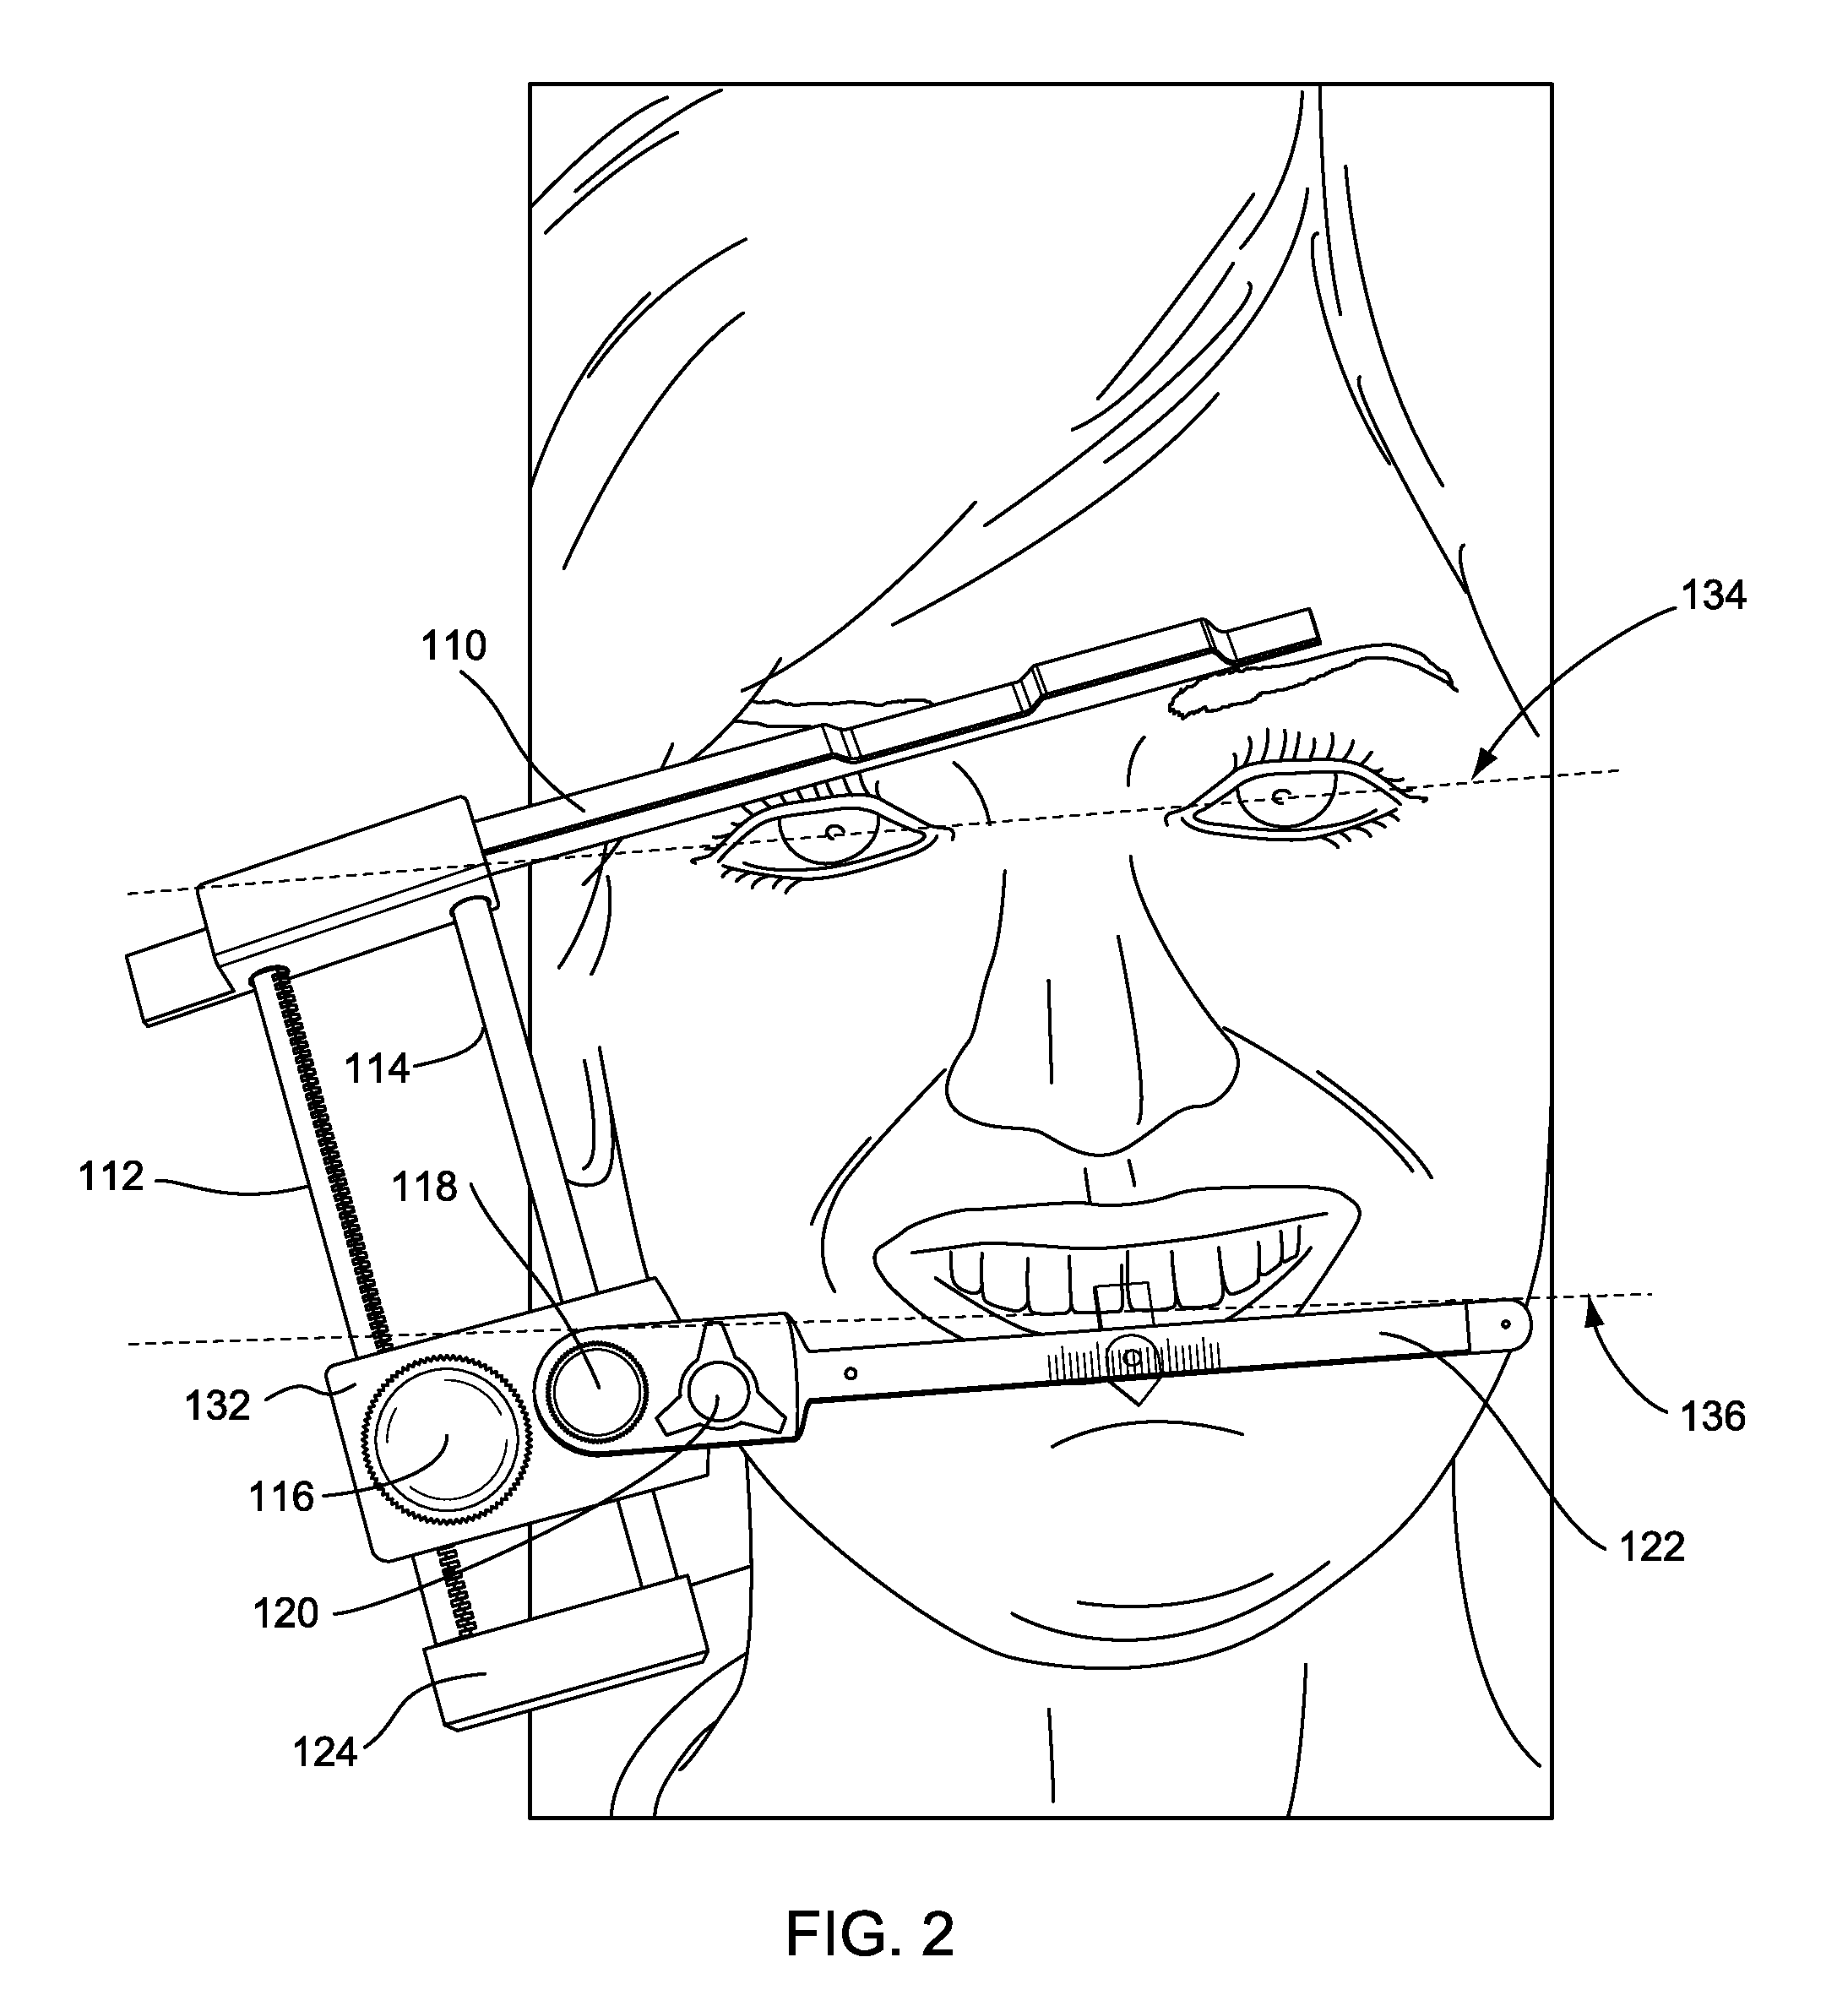 Dental measuring device